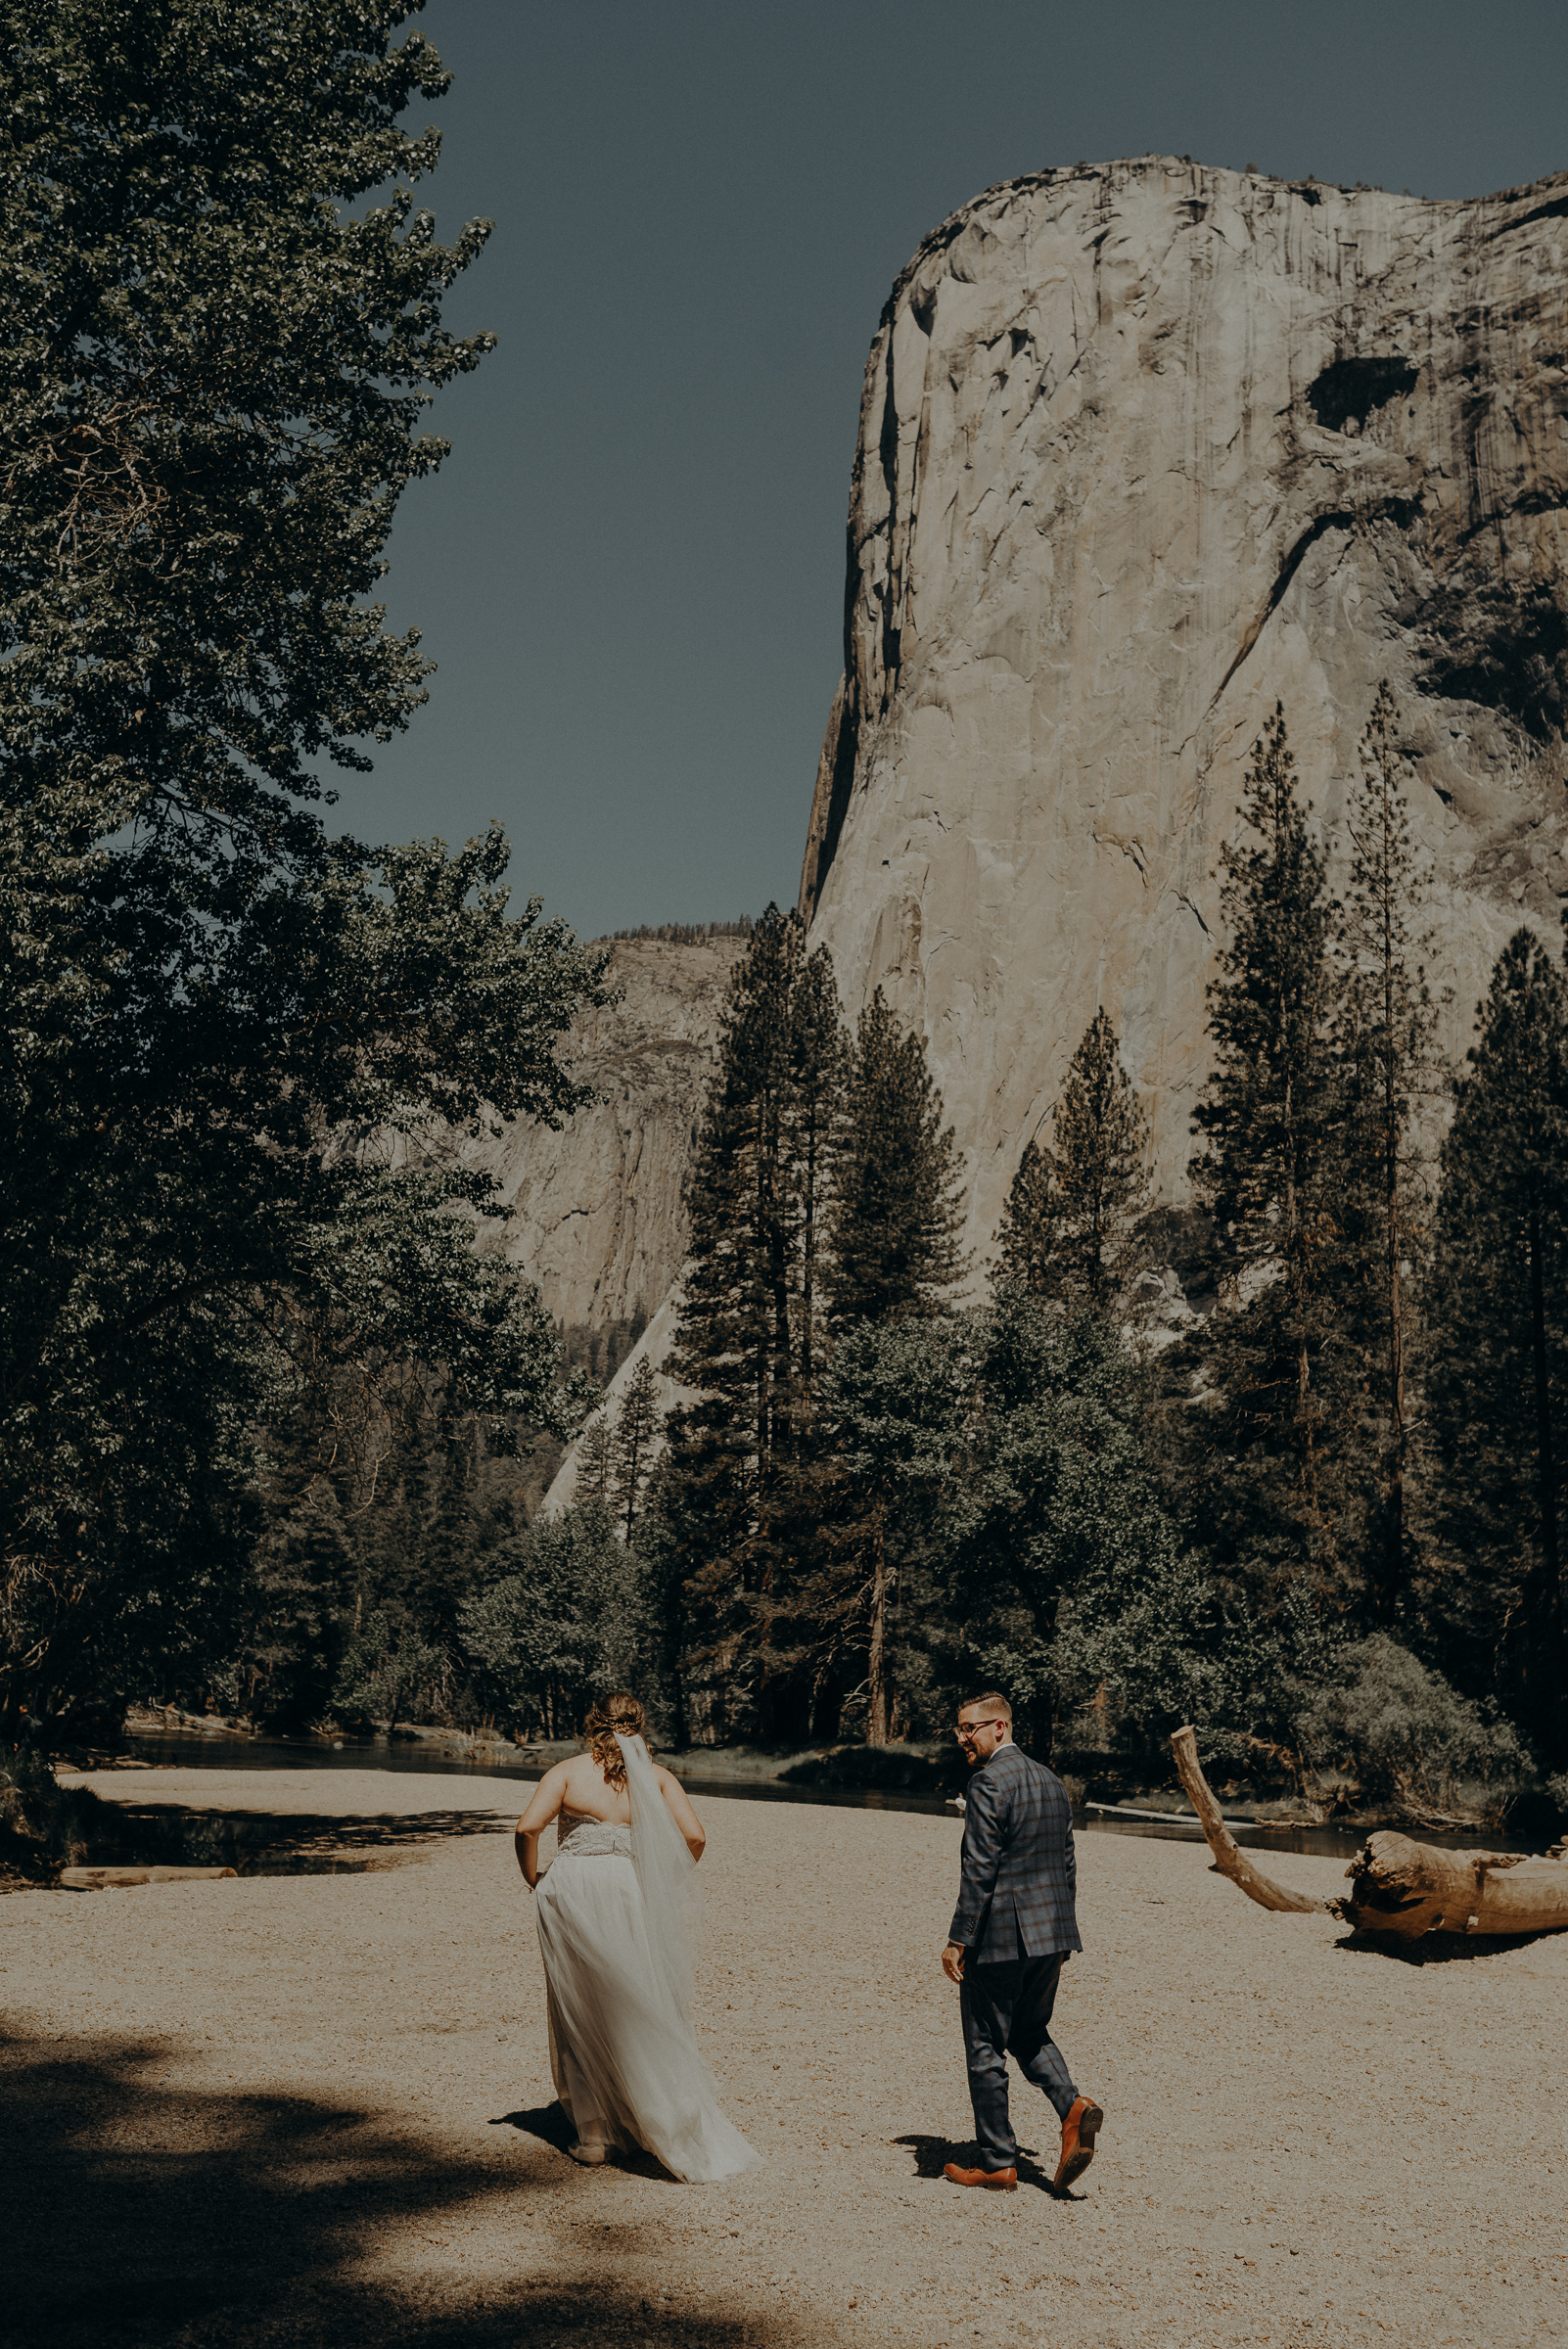 Los Angeles Wedding Photographers - Yosemite Destination Wedding Elopement - IsaiahAndTaylor.com -075.jpg